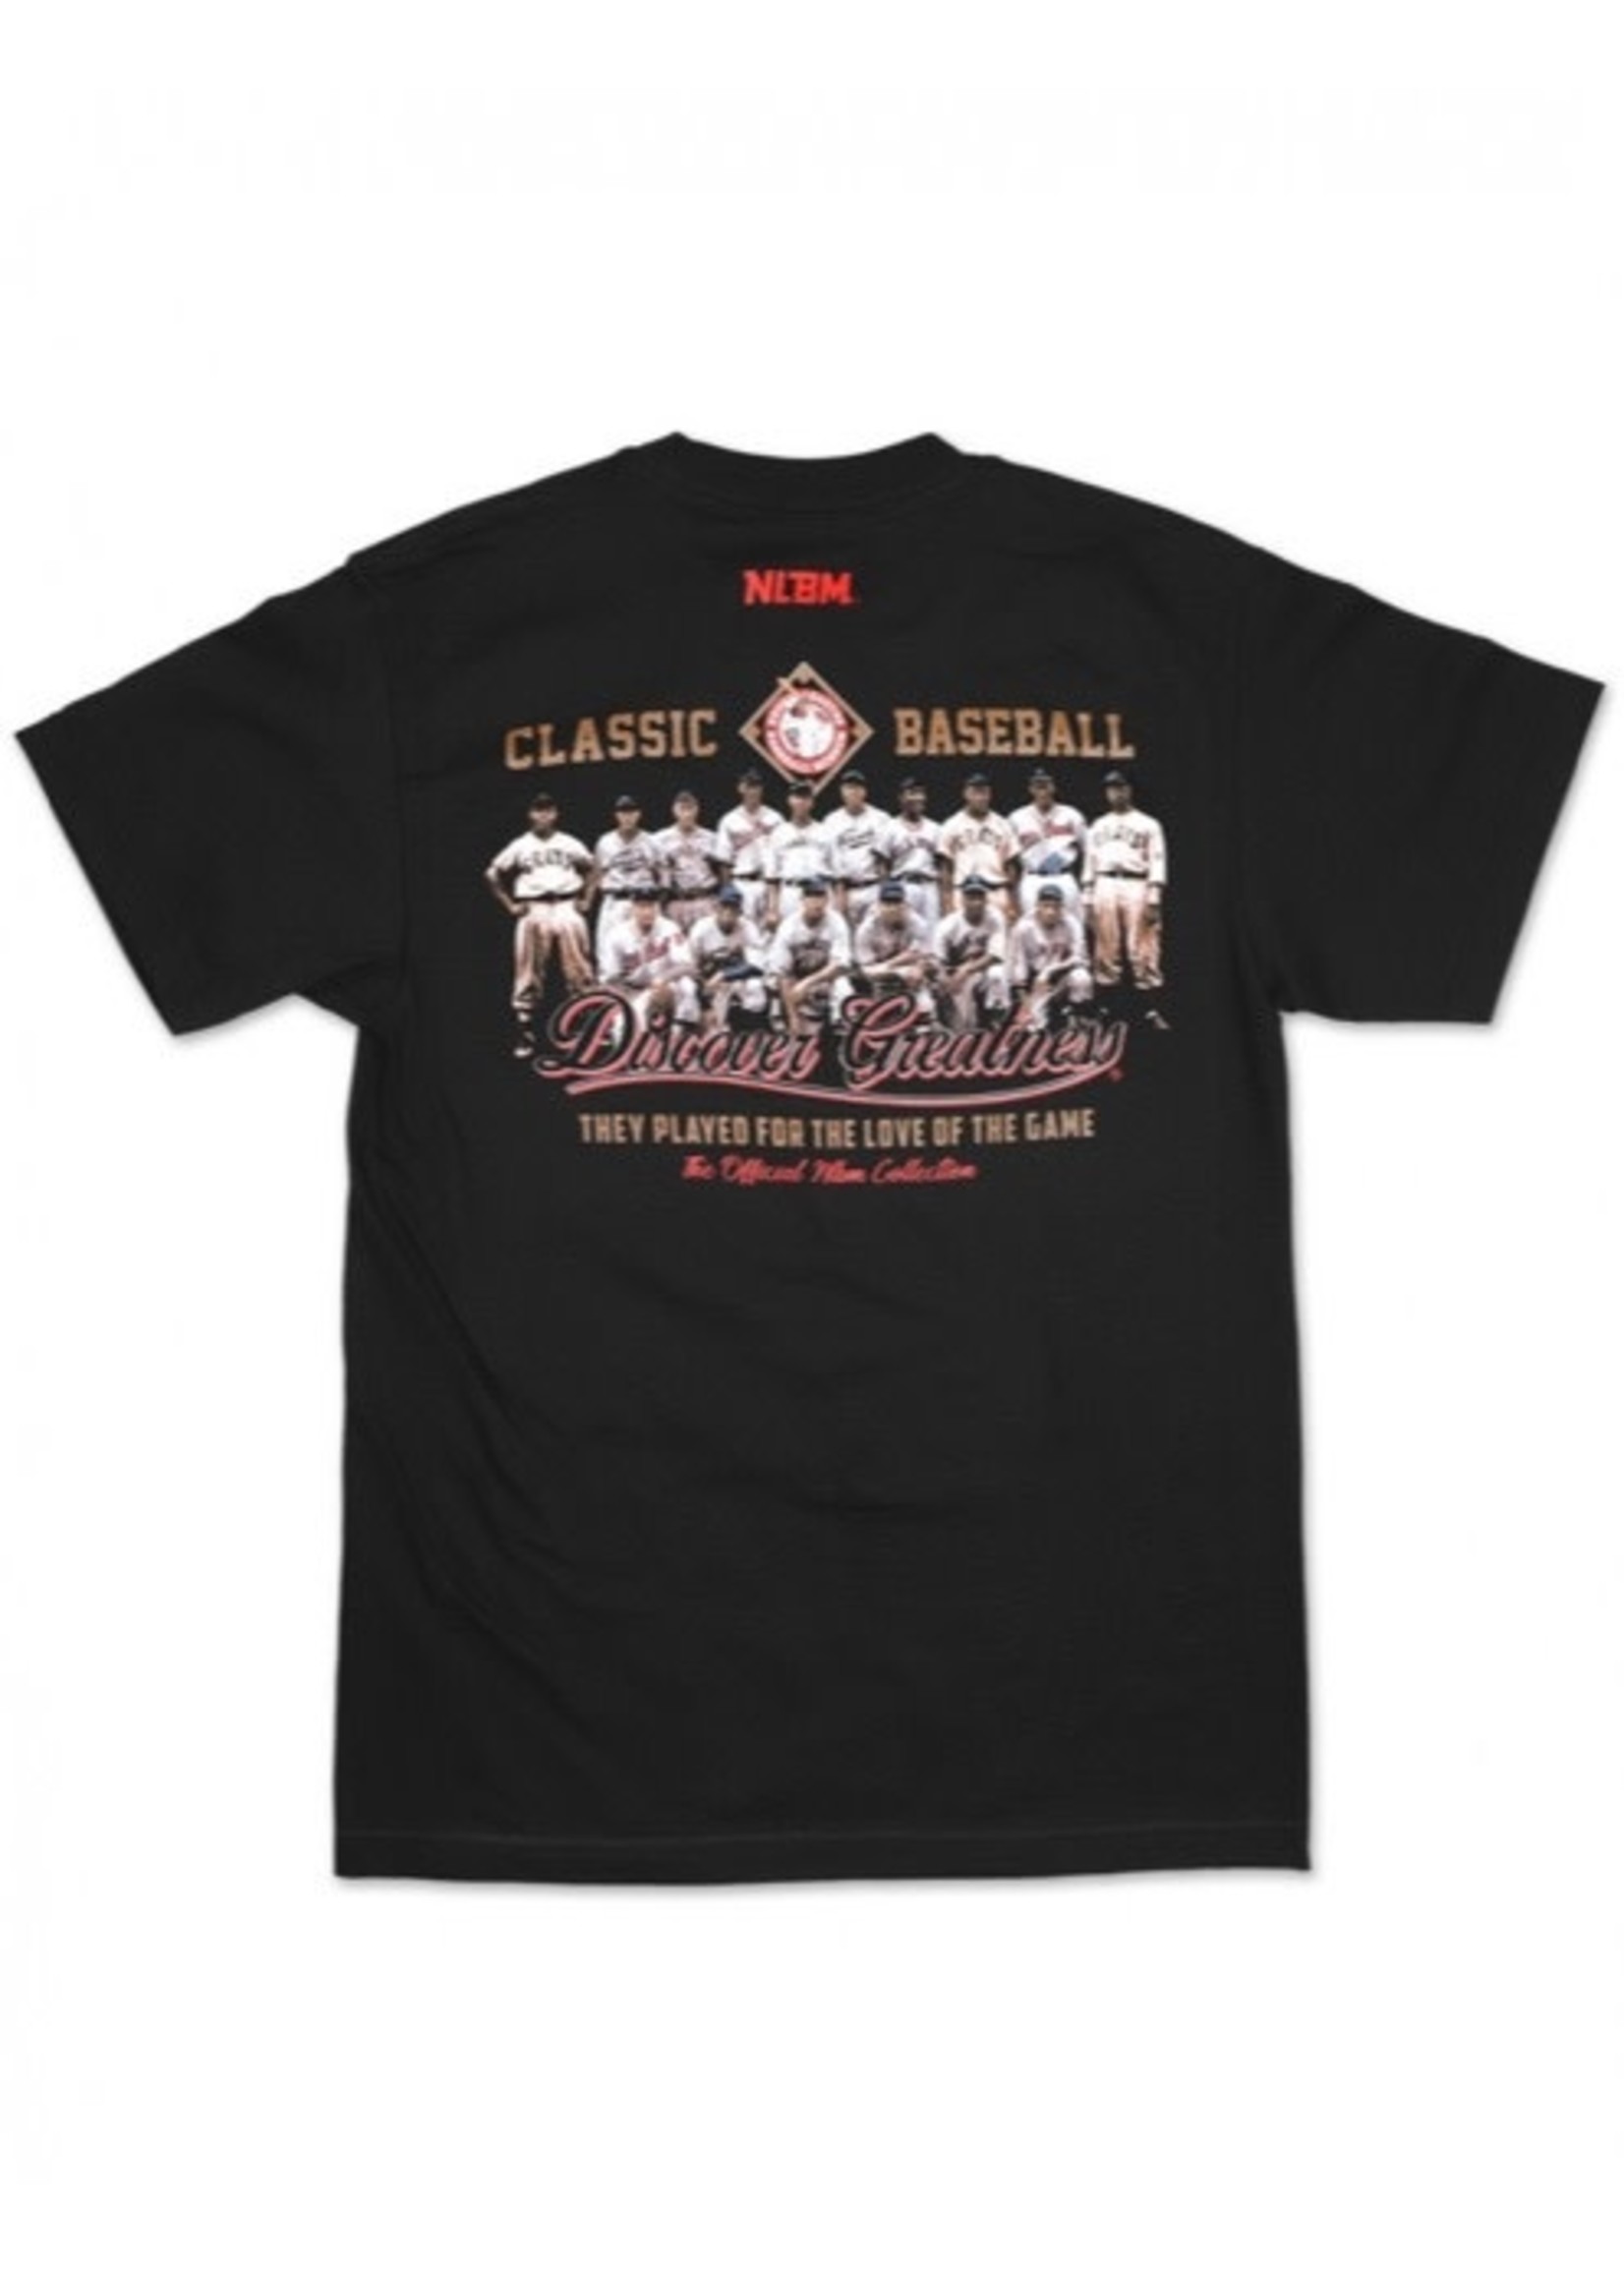 New York Black Yankees Negro League XL Baseball Jersey by Headgear Classics  see!